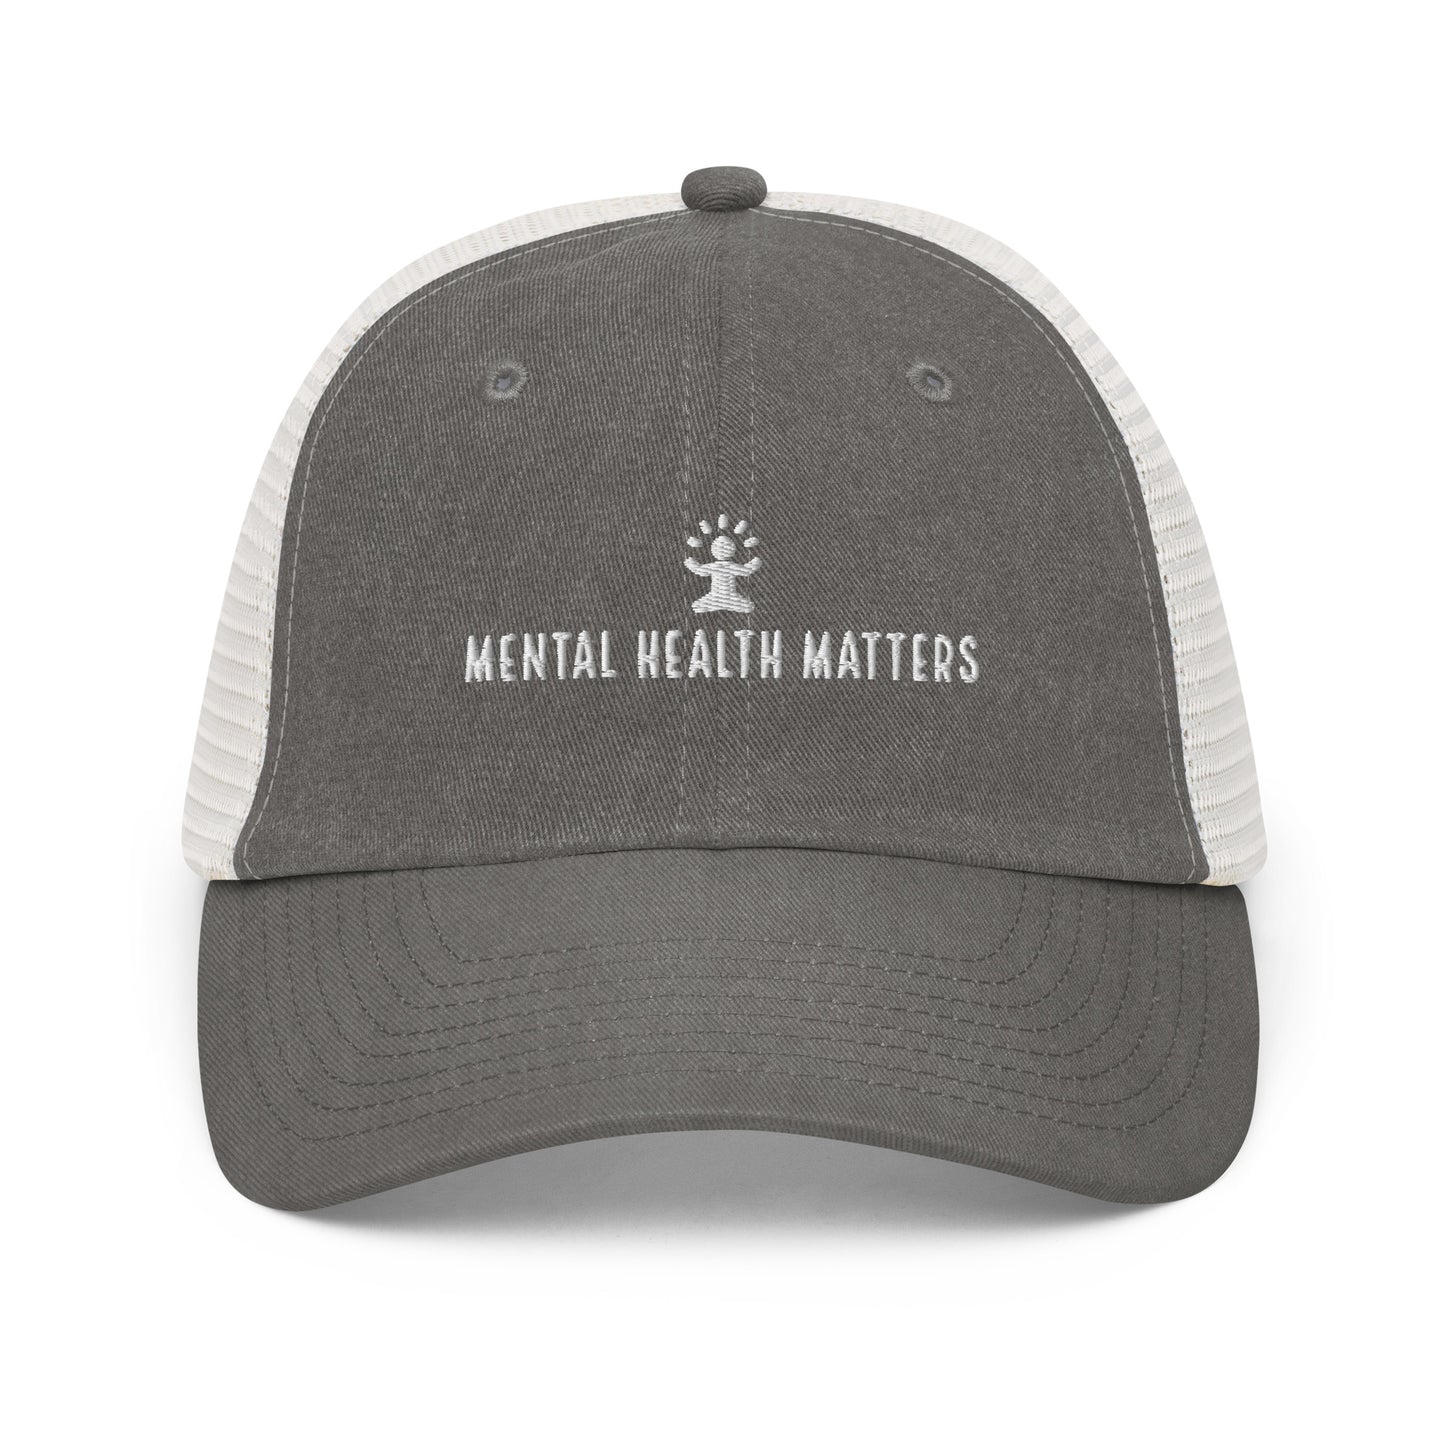 Mentals Matter Hat - Grey Front